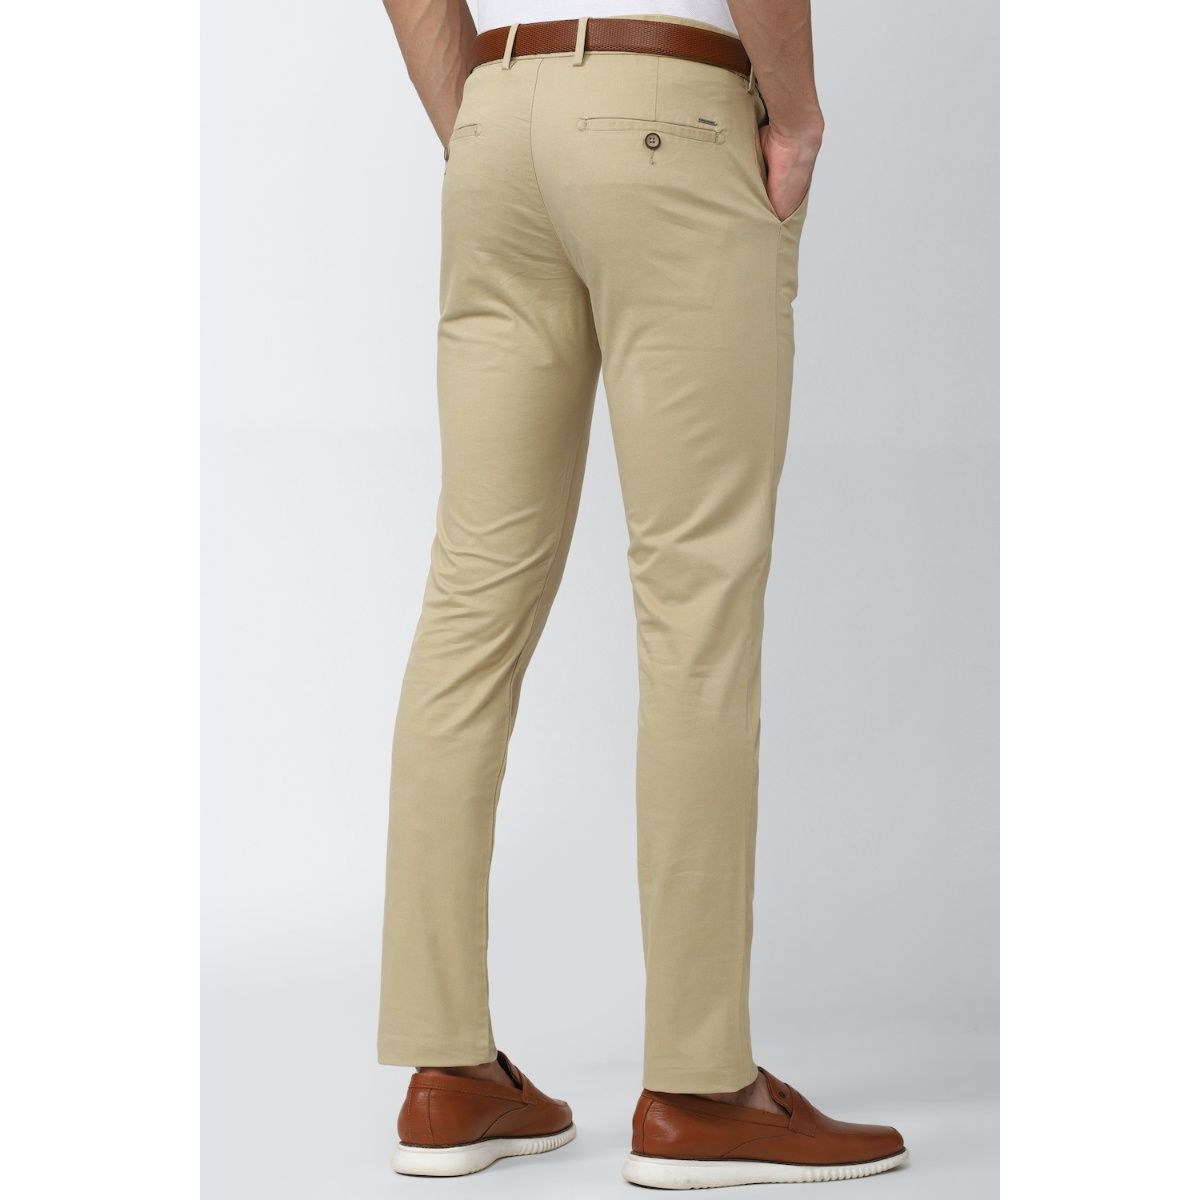 Buy Peter England Men Khaki Solid Super Slim Fit Casual Trousers online